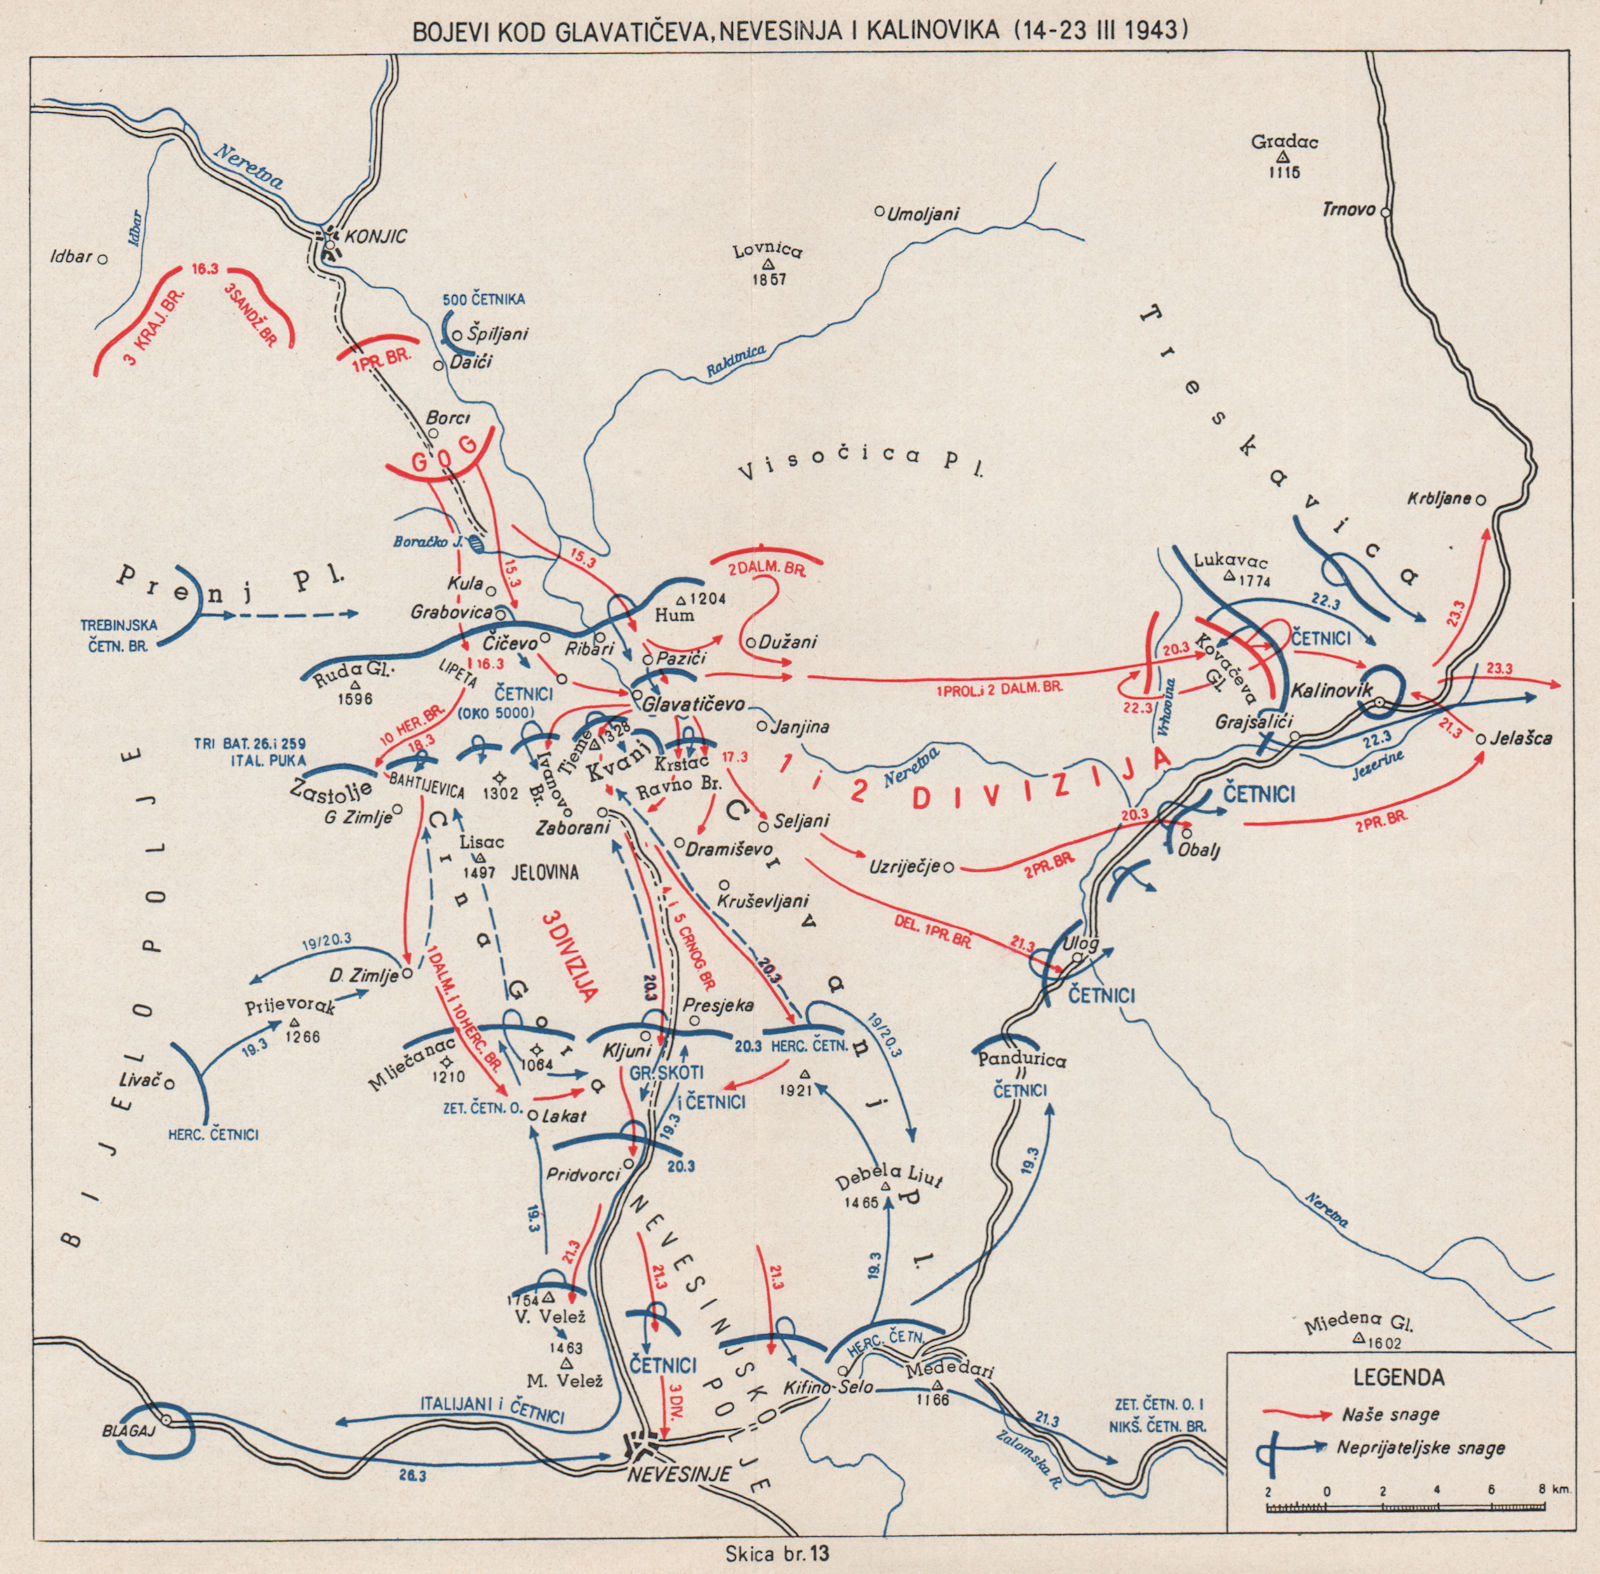 BOSNIA HERZEGOVINA. Battles Glavaticevo Nevesinje Kalinovik March 1943 1957 map